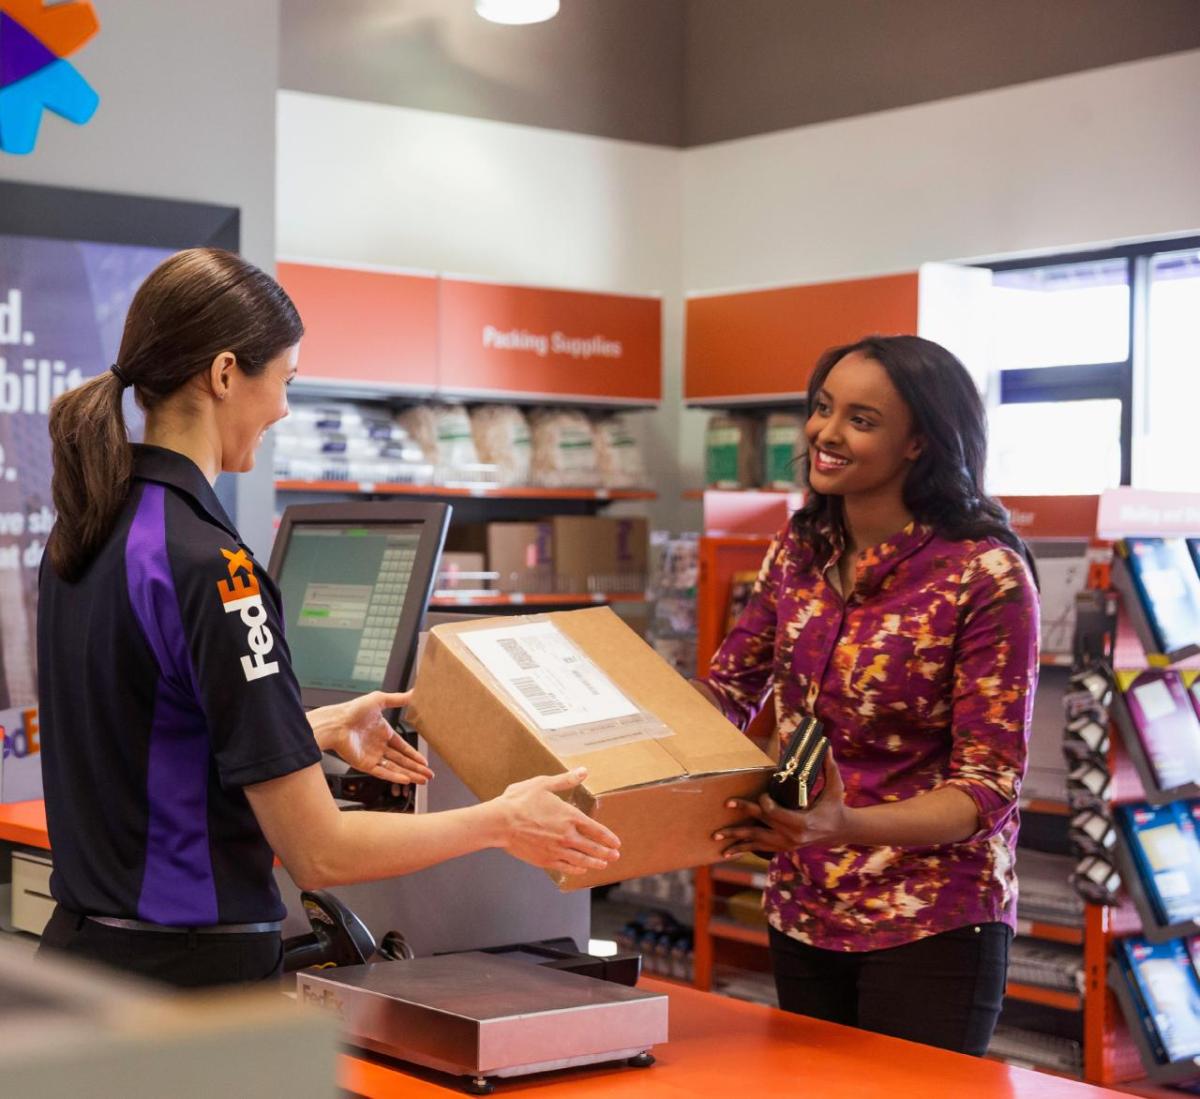 FedEx employee hands box to smiling customer